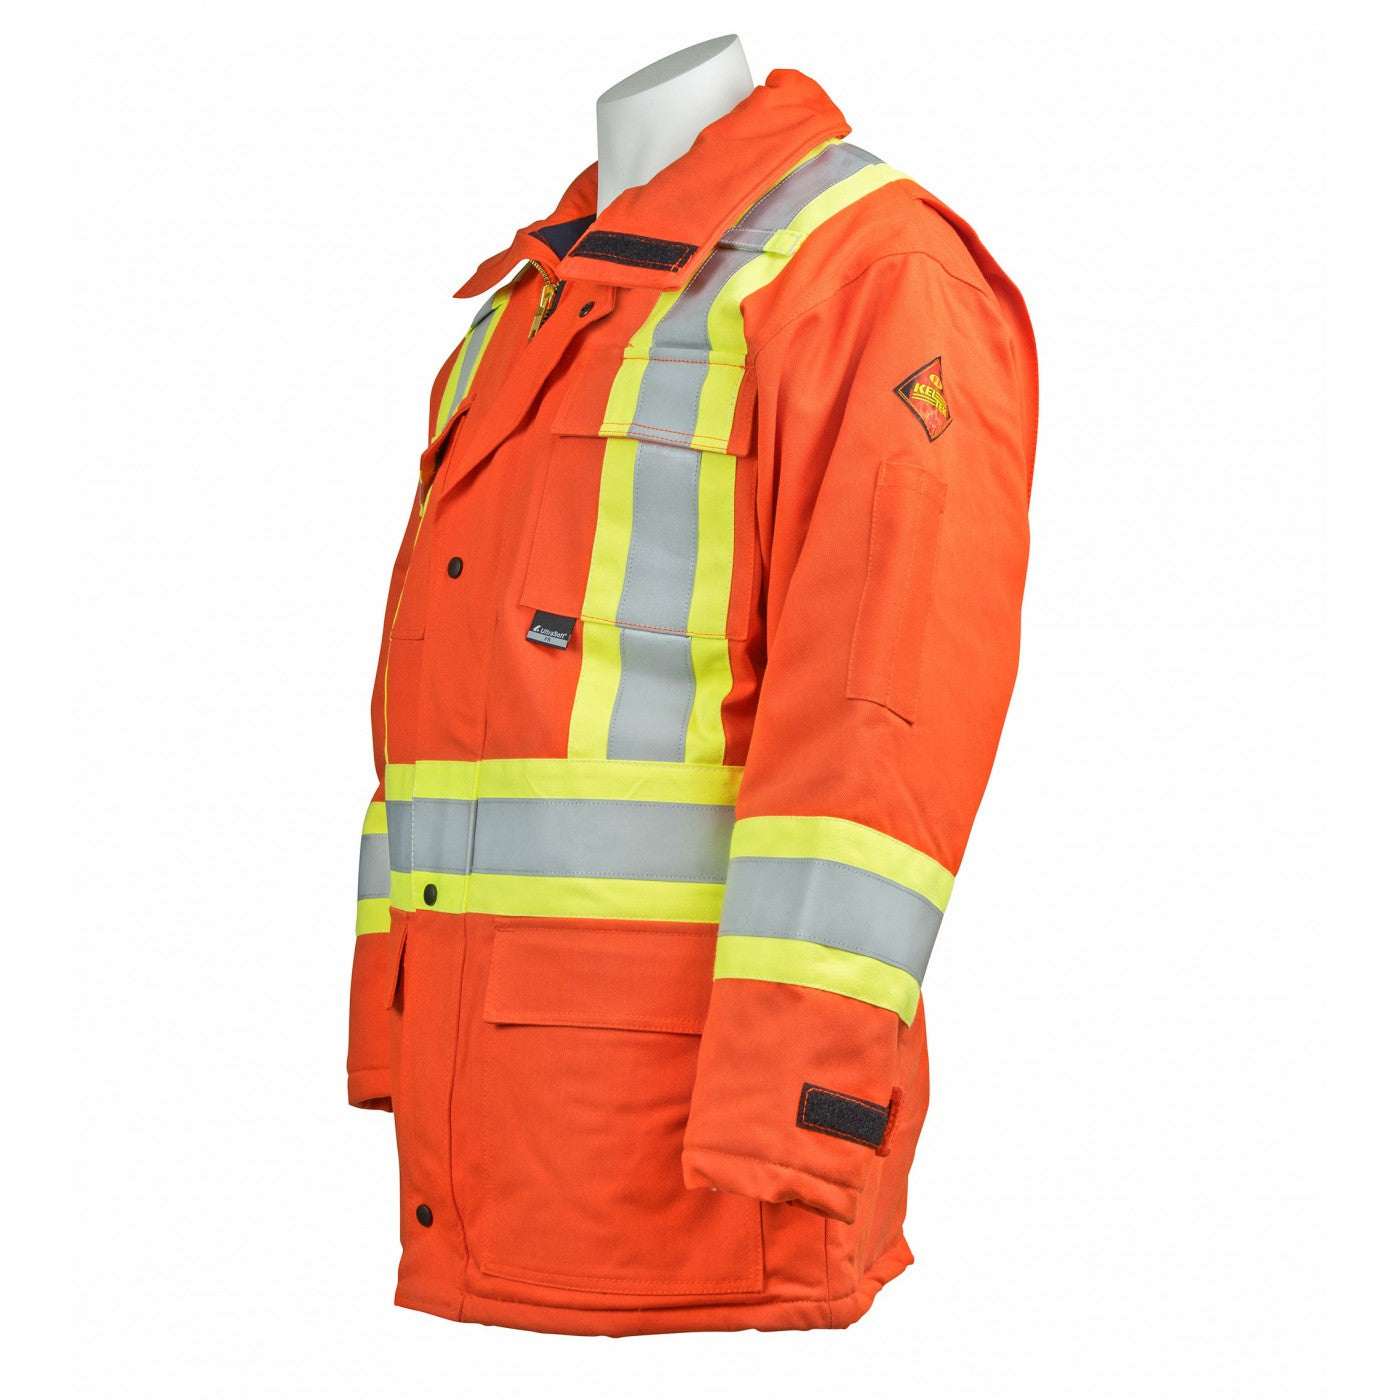 KELTEK 407s Men's Orange CSA Flame Resistant Hi-Vis Safety Parka | S-4XL (HRC 4)